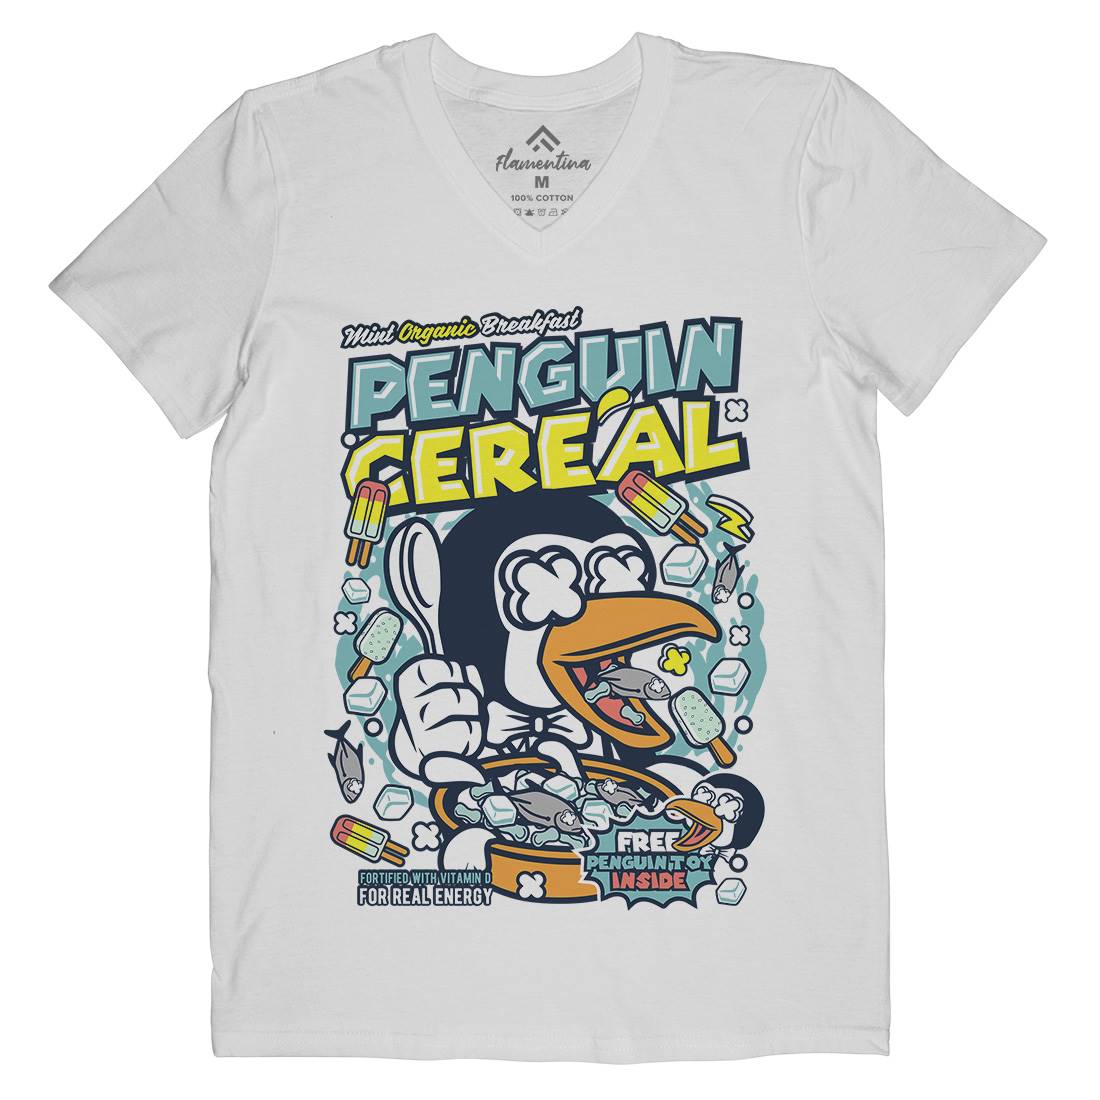 Penguin Cereal Box Mens Organic V-Neck T-Shirt Food C602